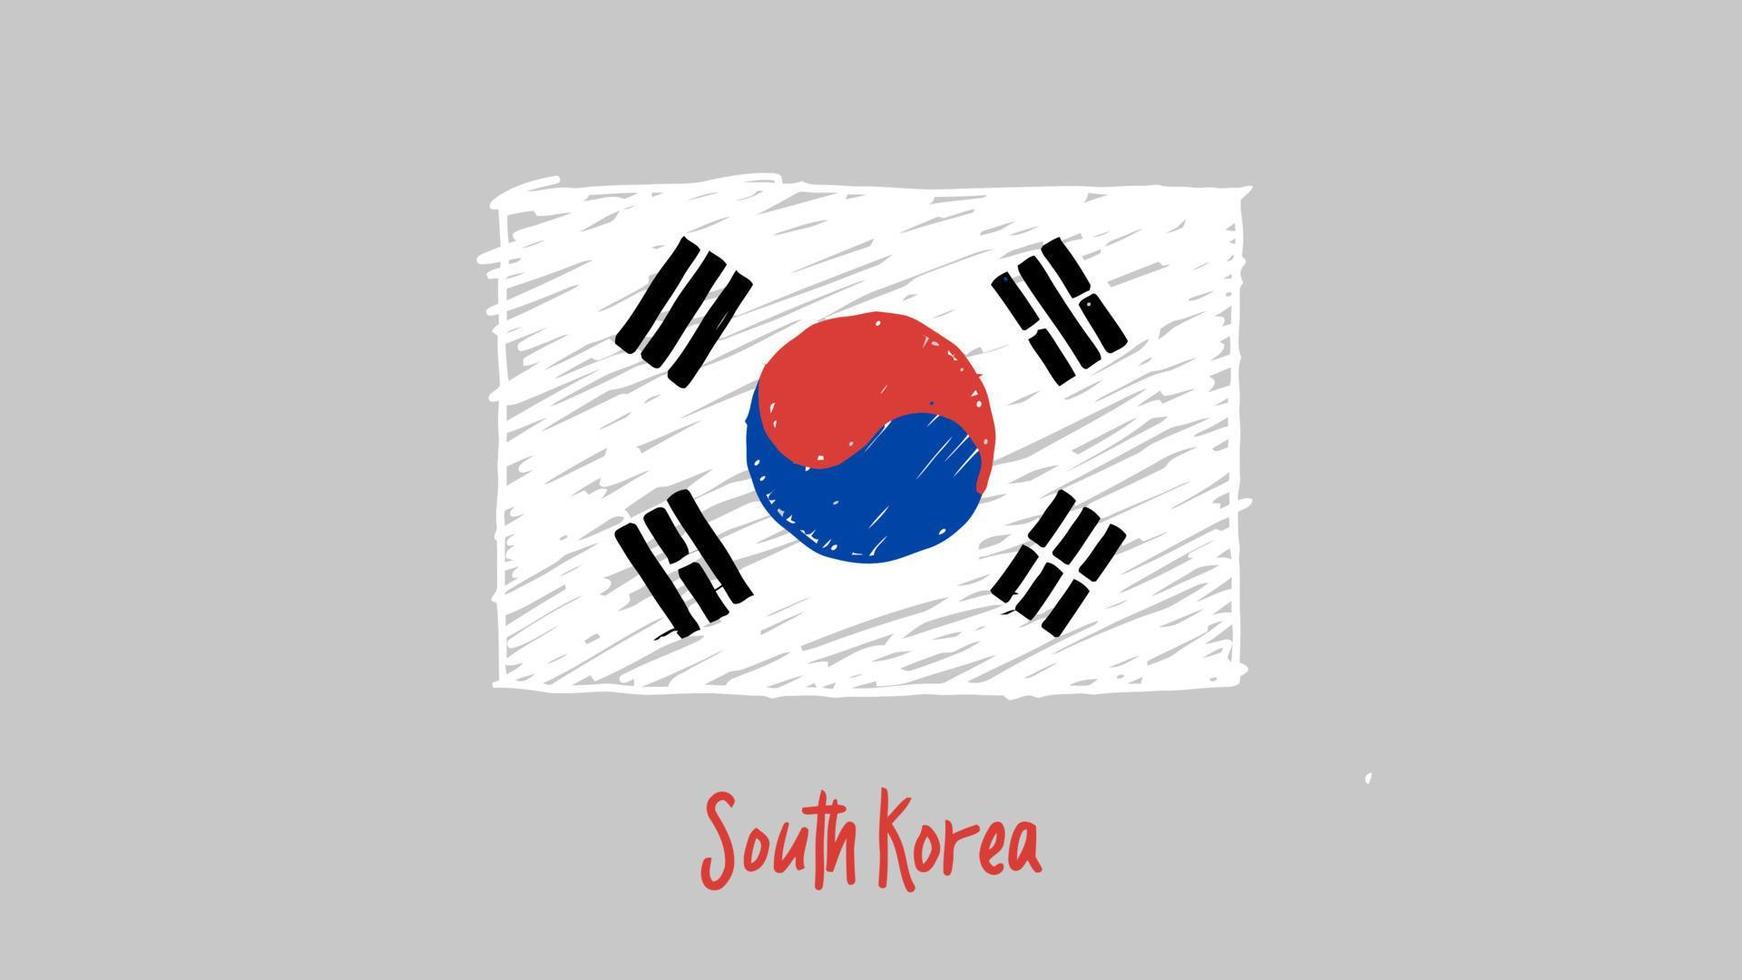 South Korea National Country Flag Marker or Pencil Sketch Illustration Vector